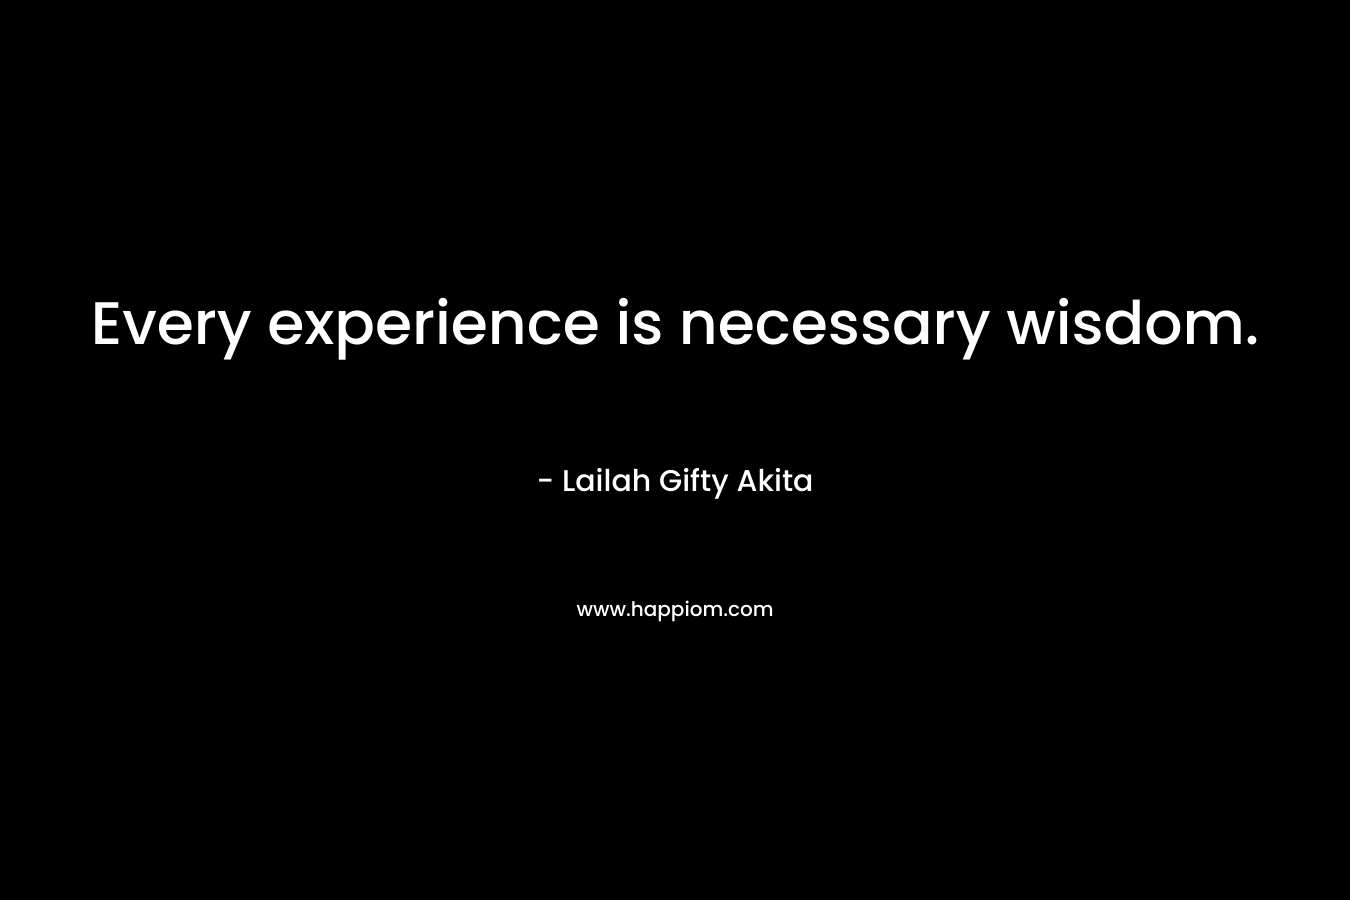 Every experience is necessary wisdom.